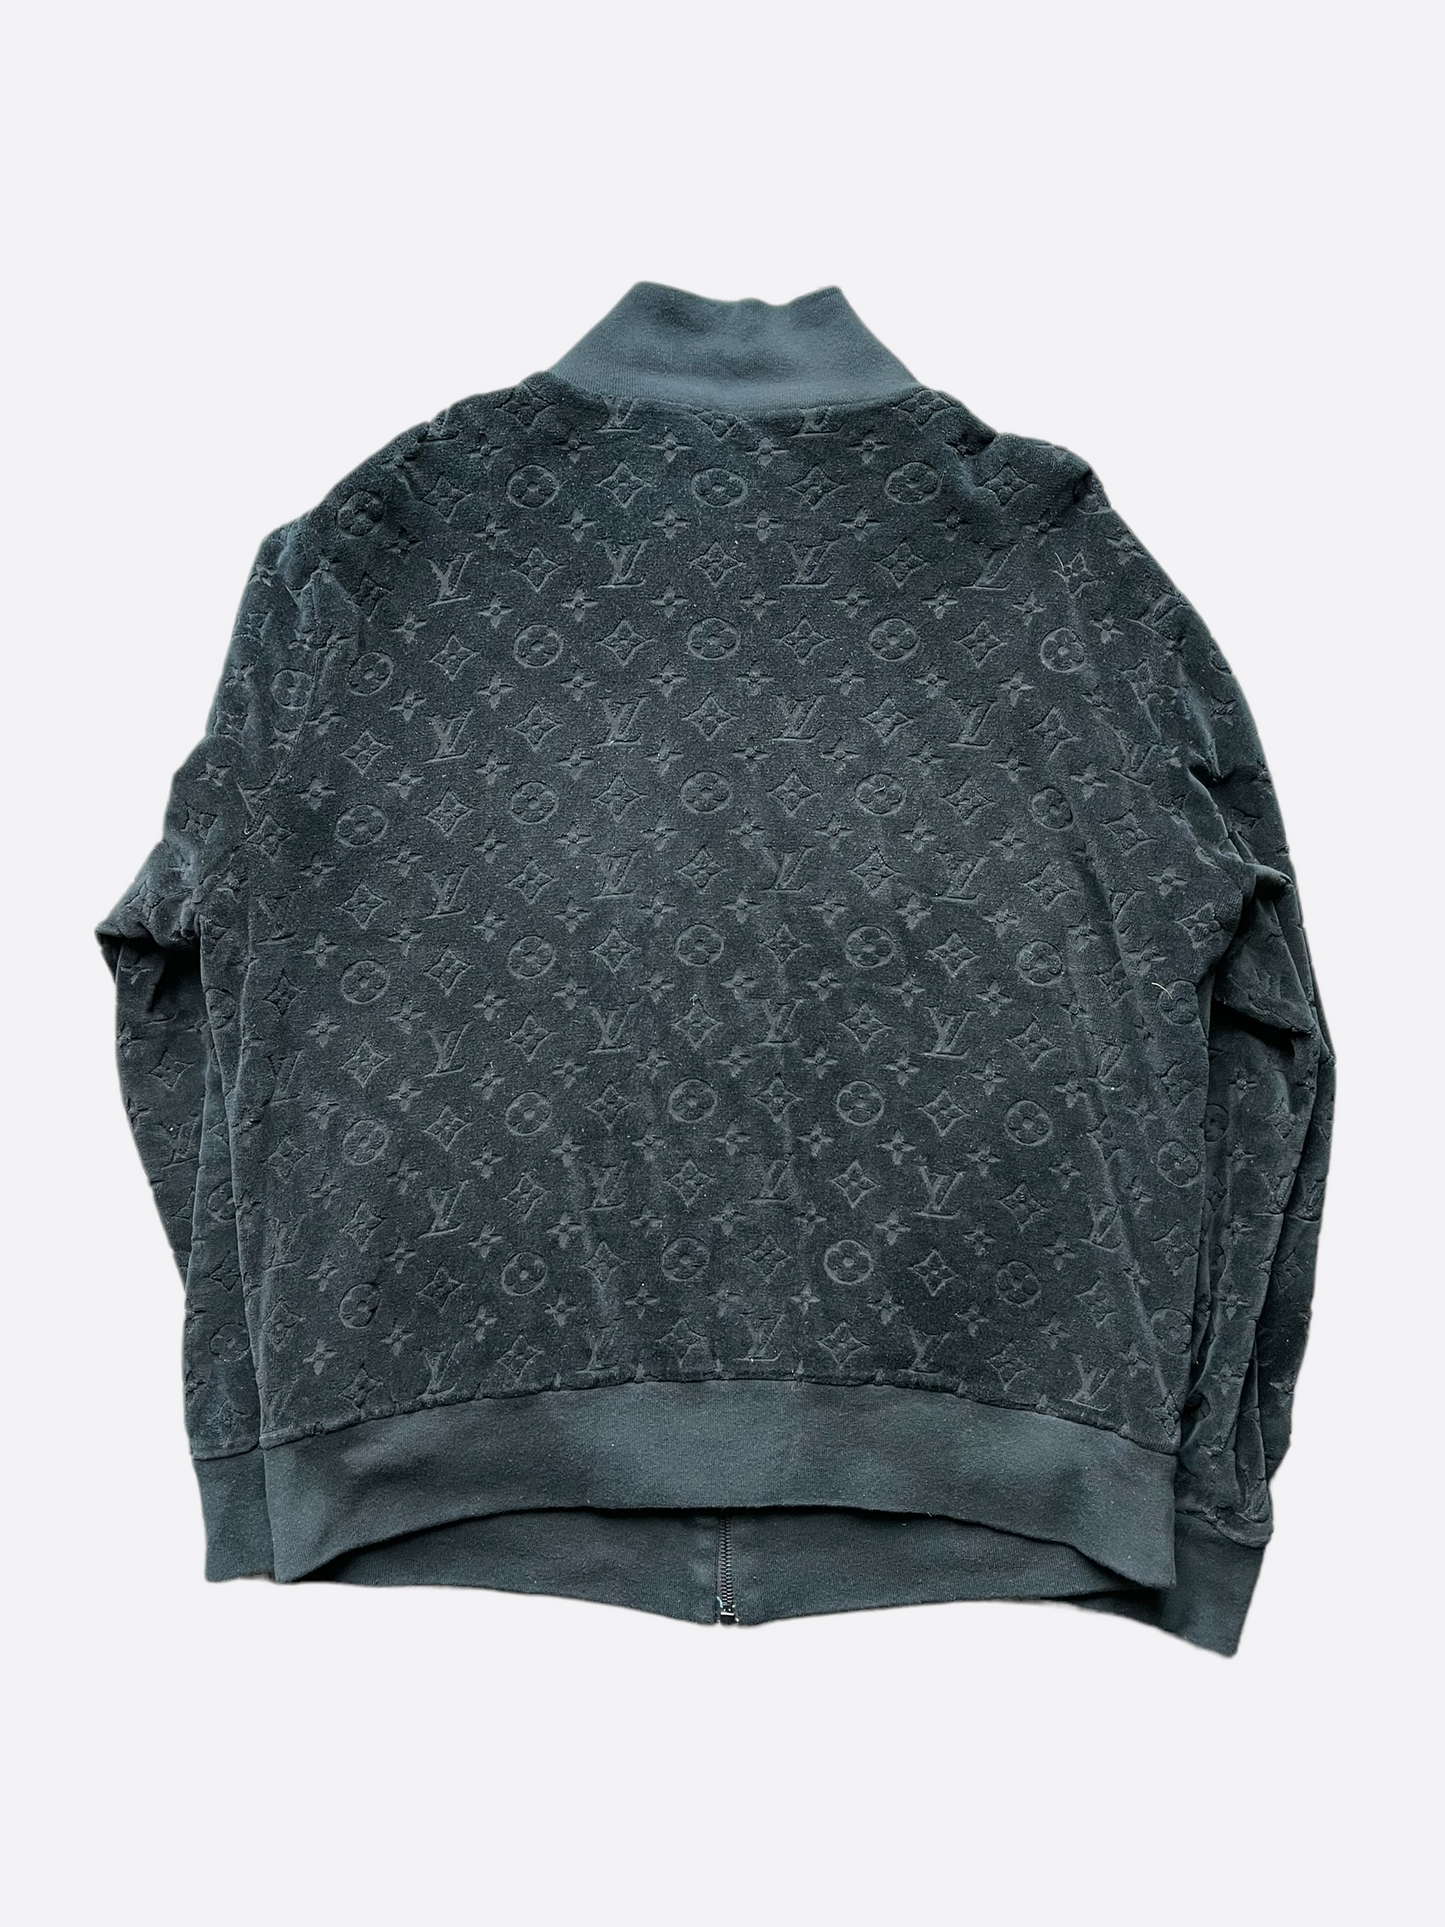 Louis Vuitton Black Velour Monogram Track Jacket